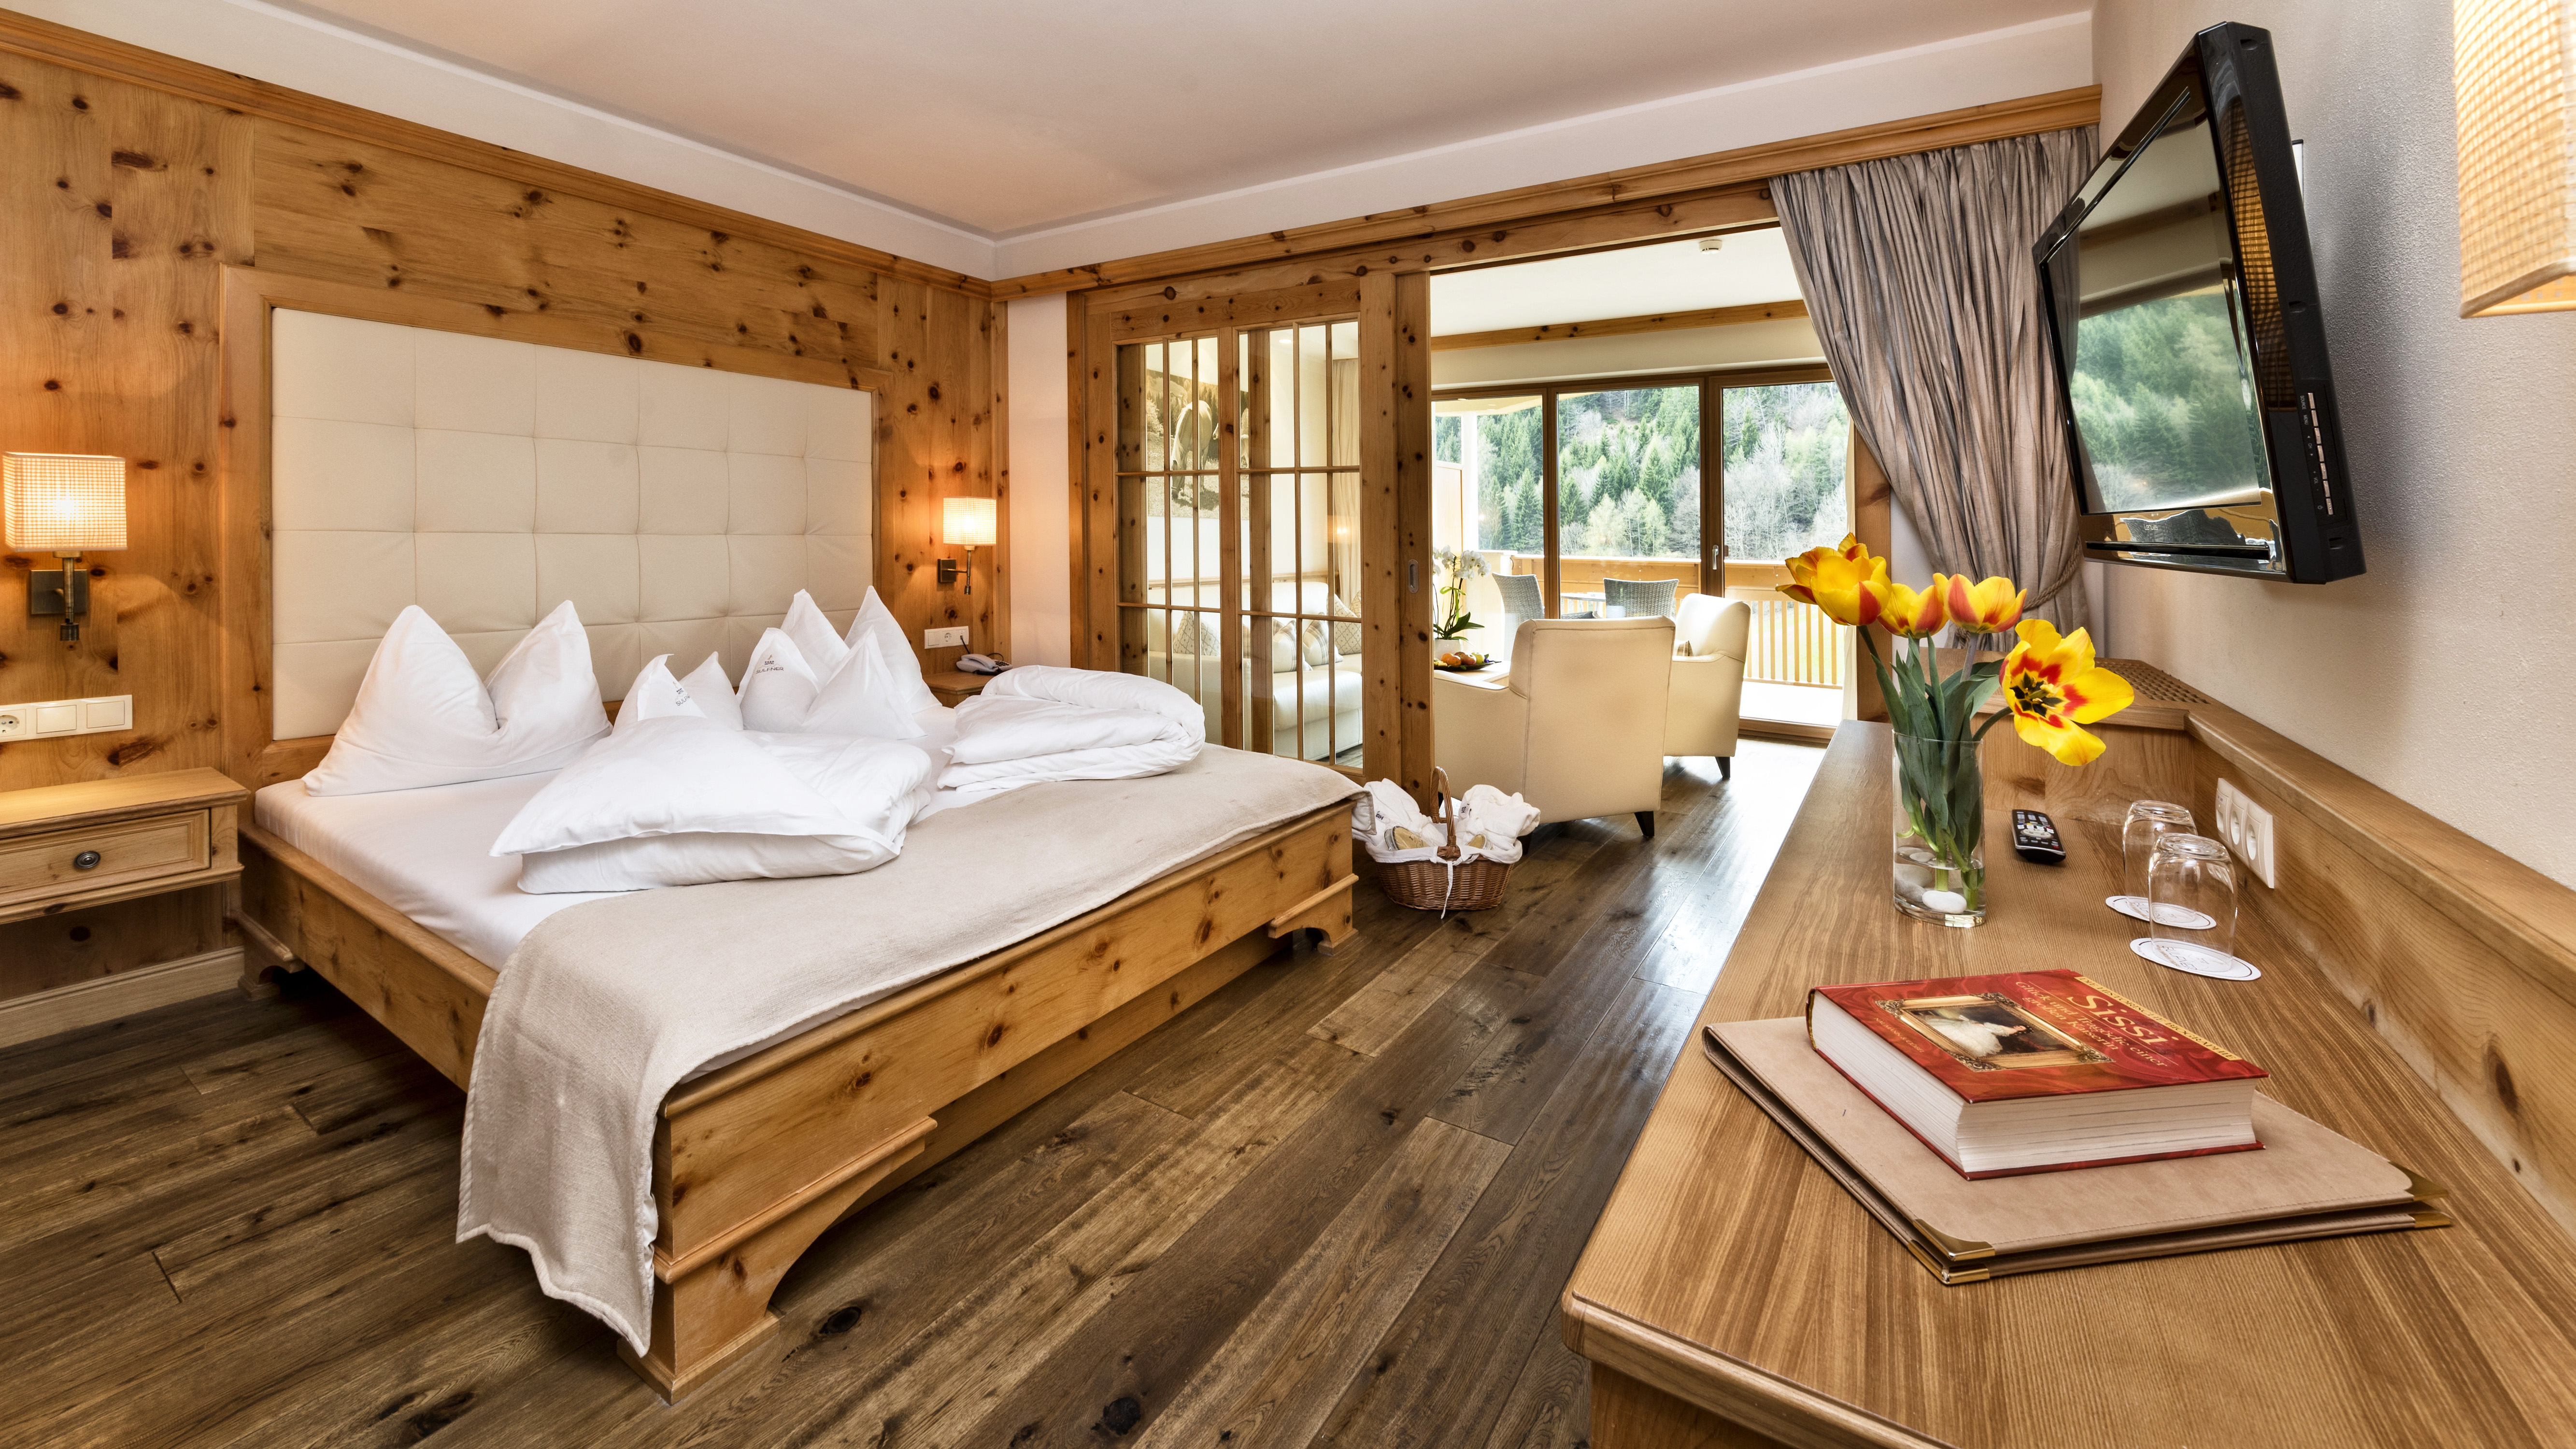 Wohnkomfort Hotel Hafling 4 Sterne | Comfort abitativo Hotel Avelengo 4 stelle | Living comfort Hotel Hafling 4 star